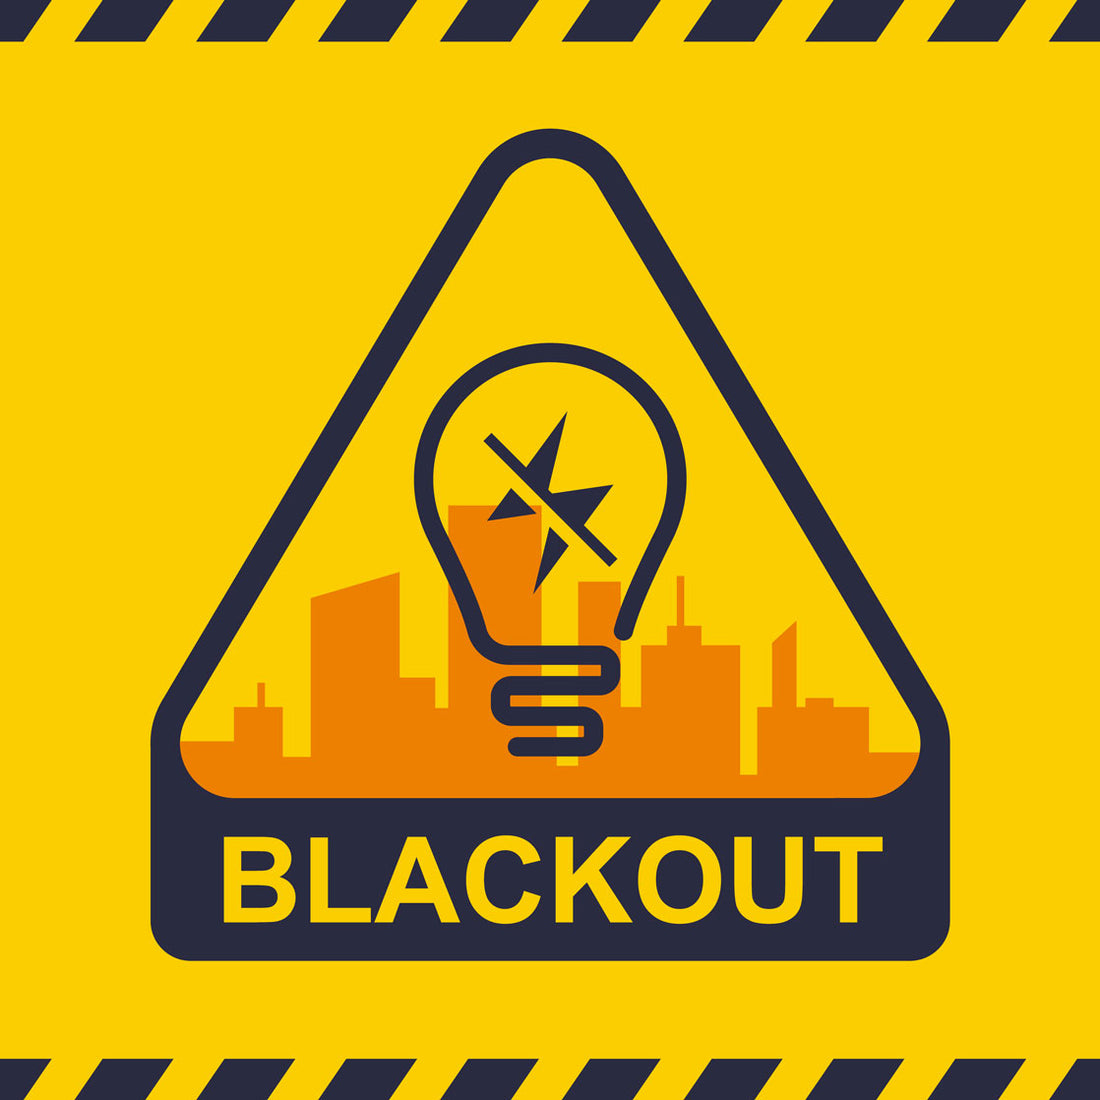 Blackout Notfallausrüstung  Notfallset für Stromausfälle – BAG 2 SAFE